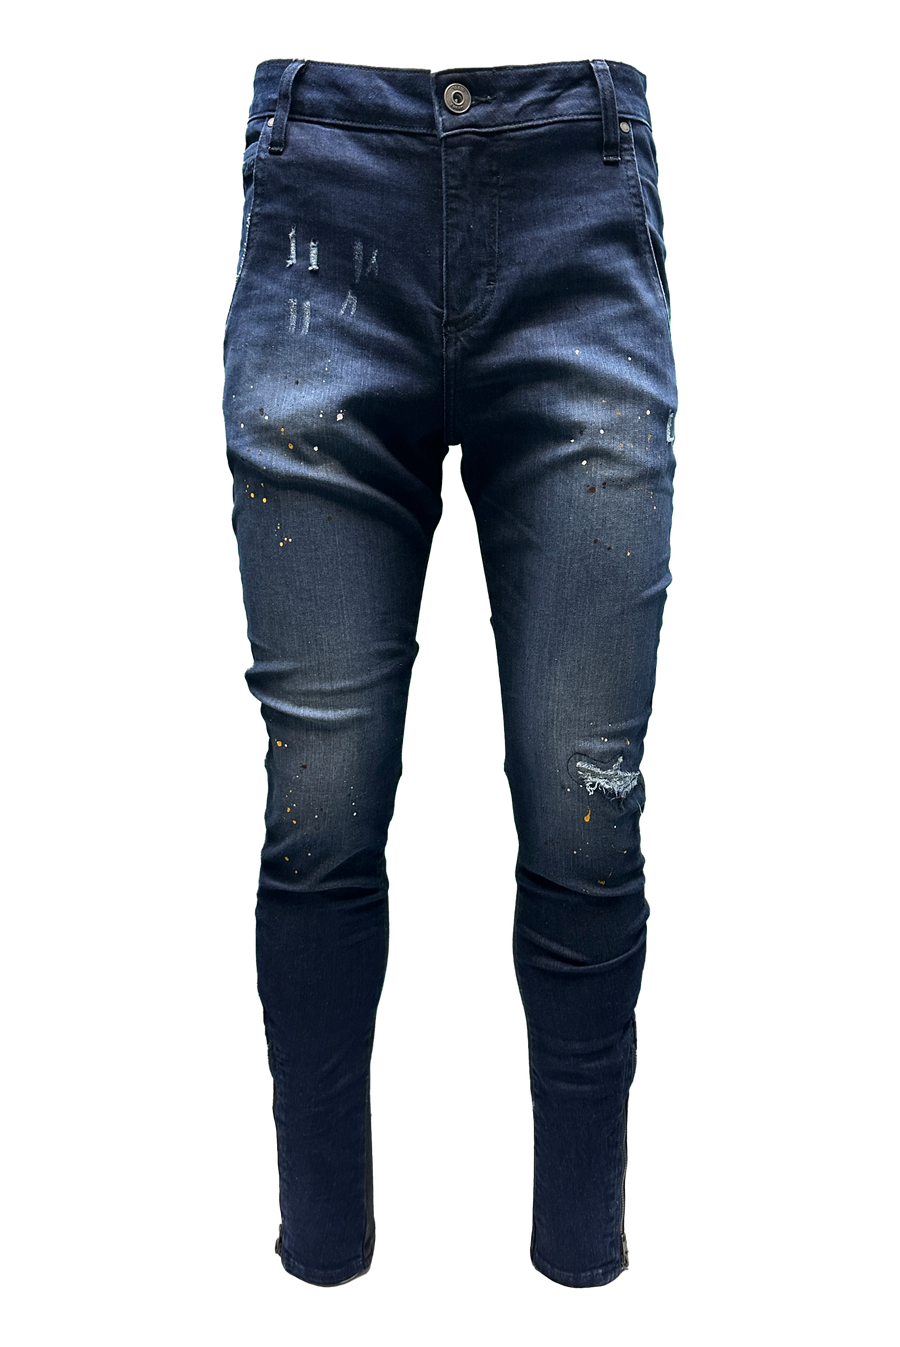 Cwitch Ultra-Fit Jean*